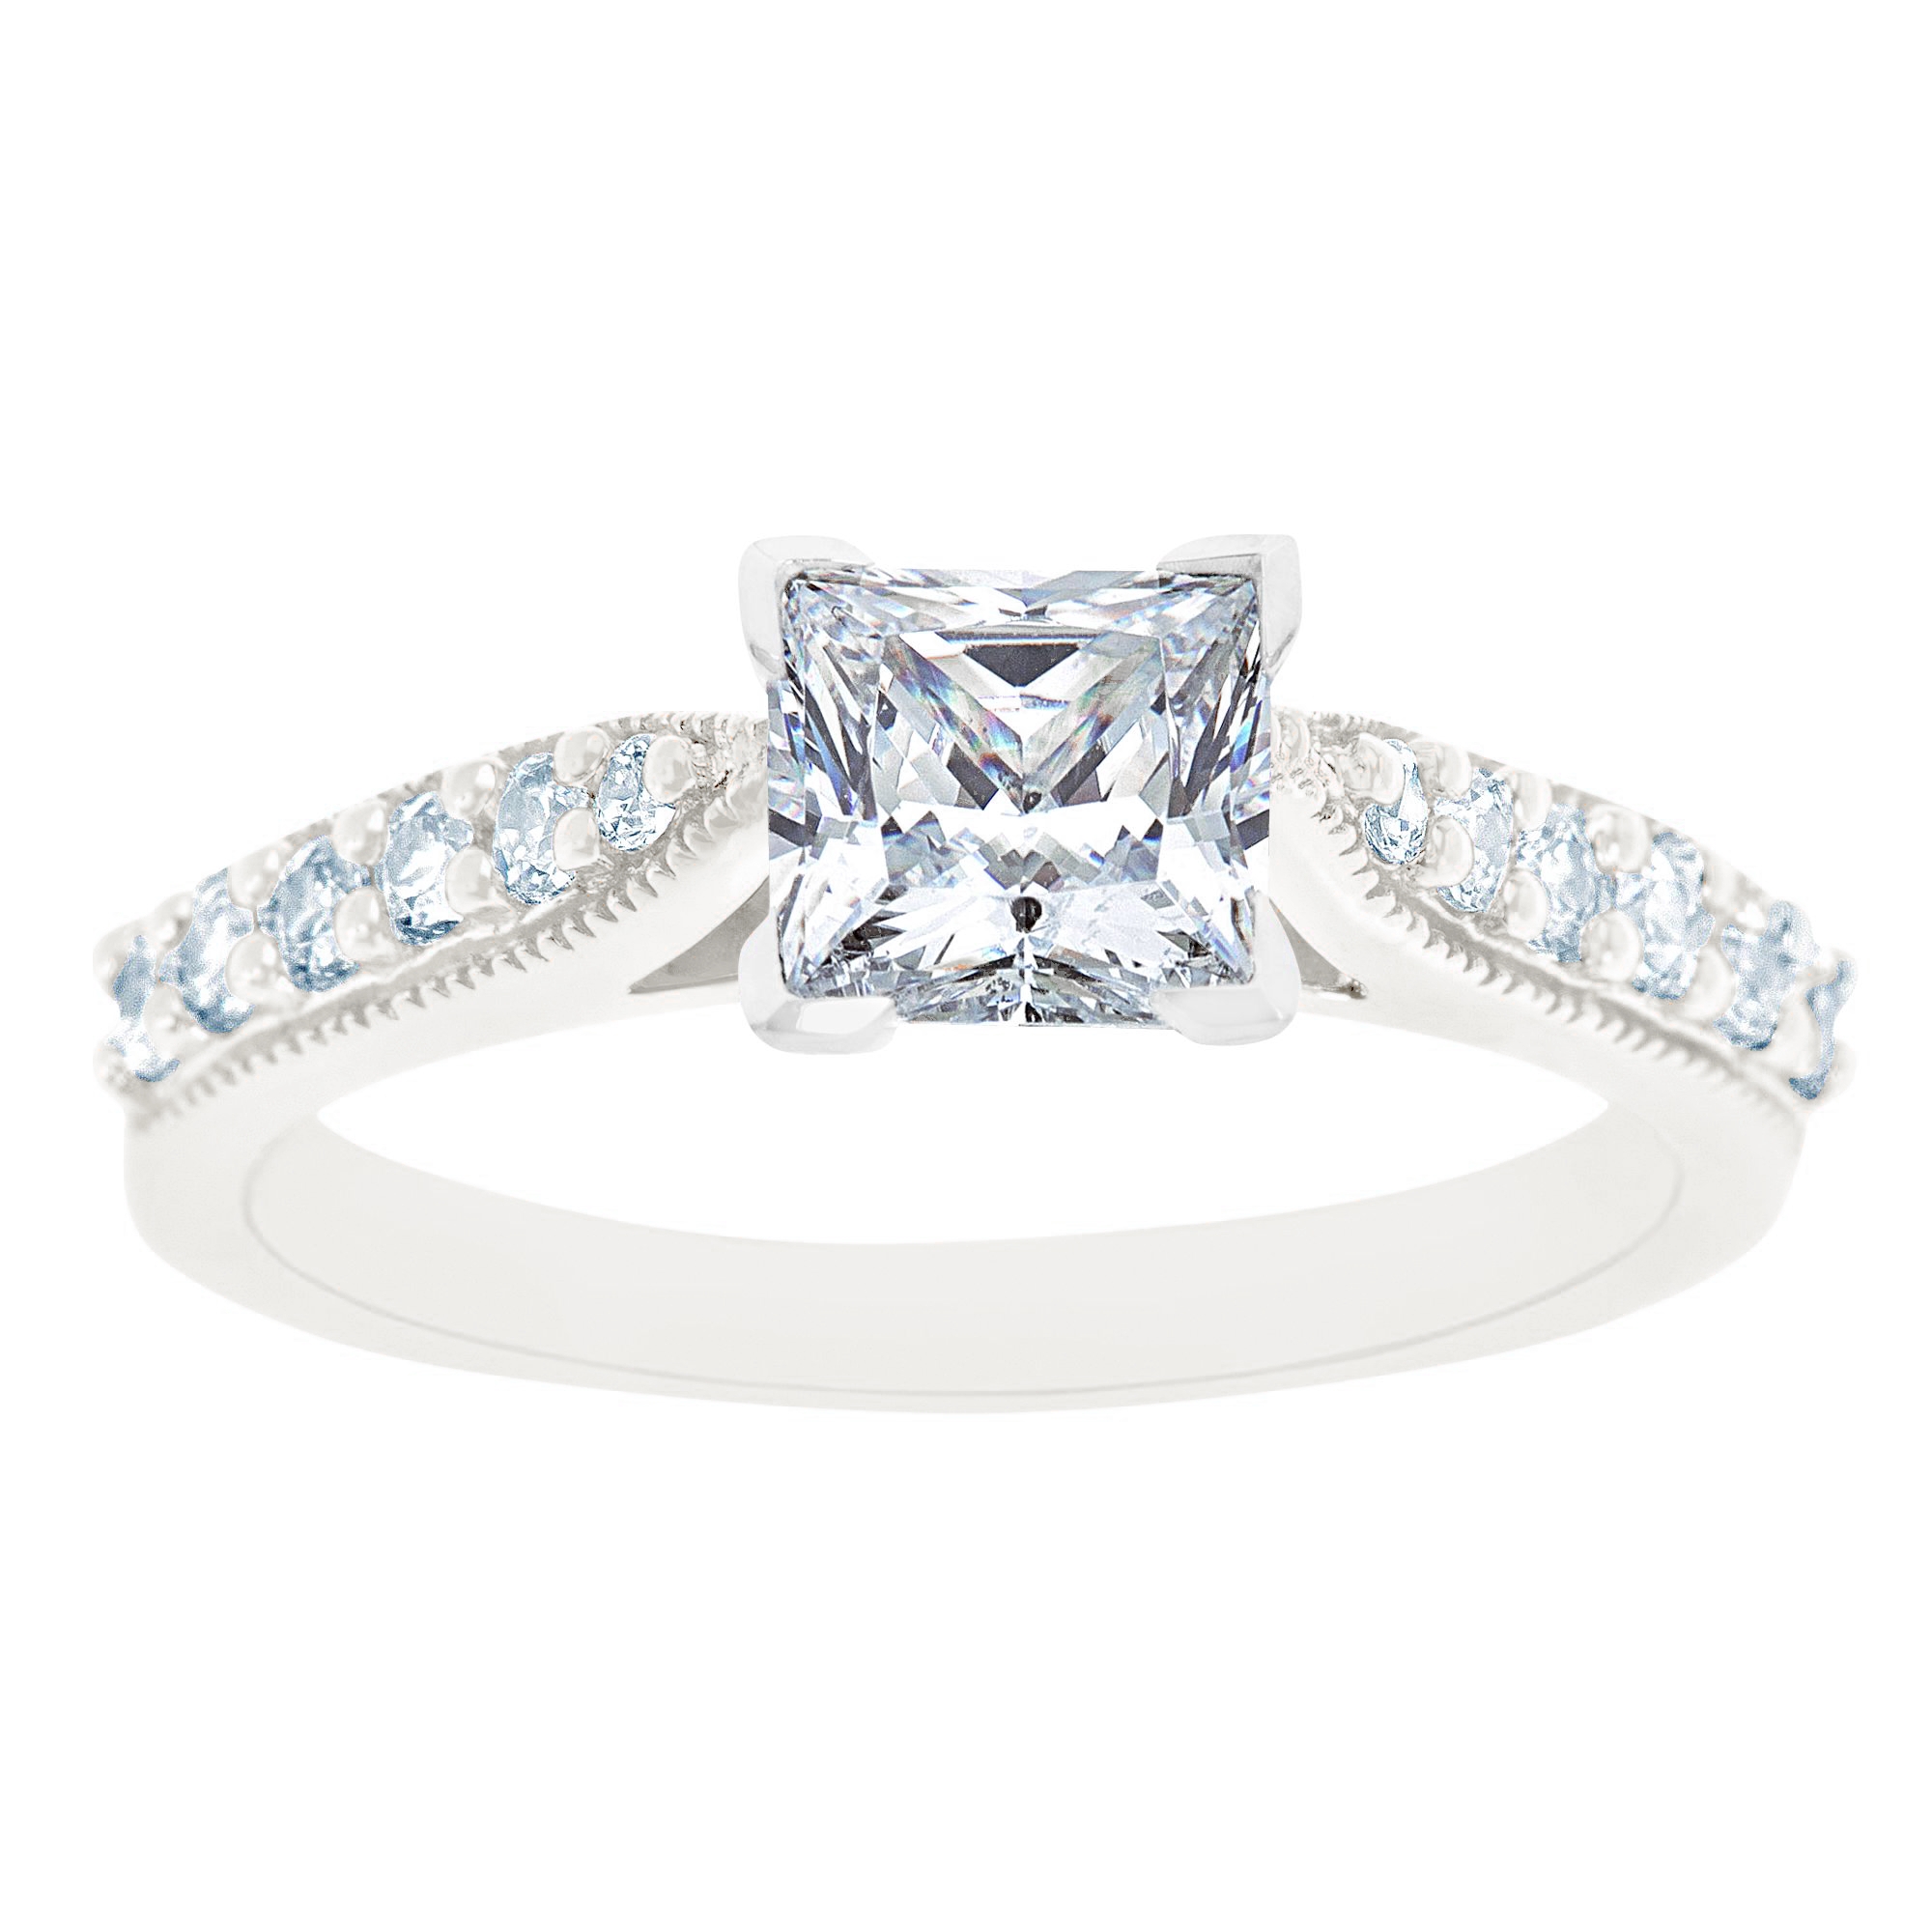 New York City Diamond District 14K White Gold Milgrain Cathedral Princess Cut Certified Diamond Engagement Ring